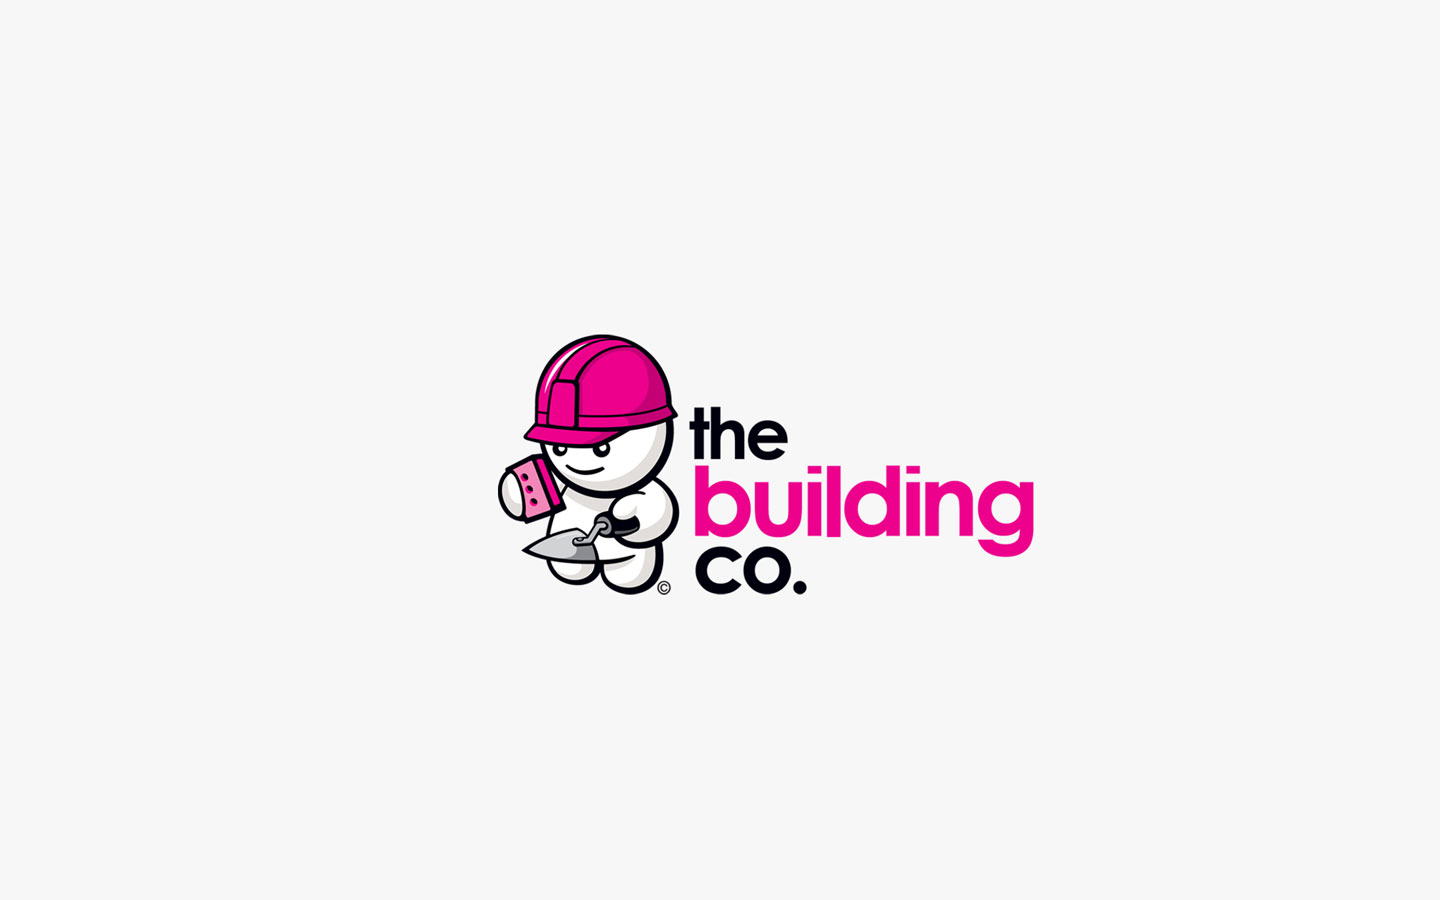 The Building Company, Logo Design in Brand Colours